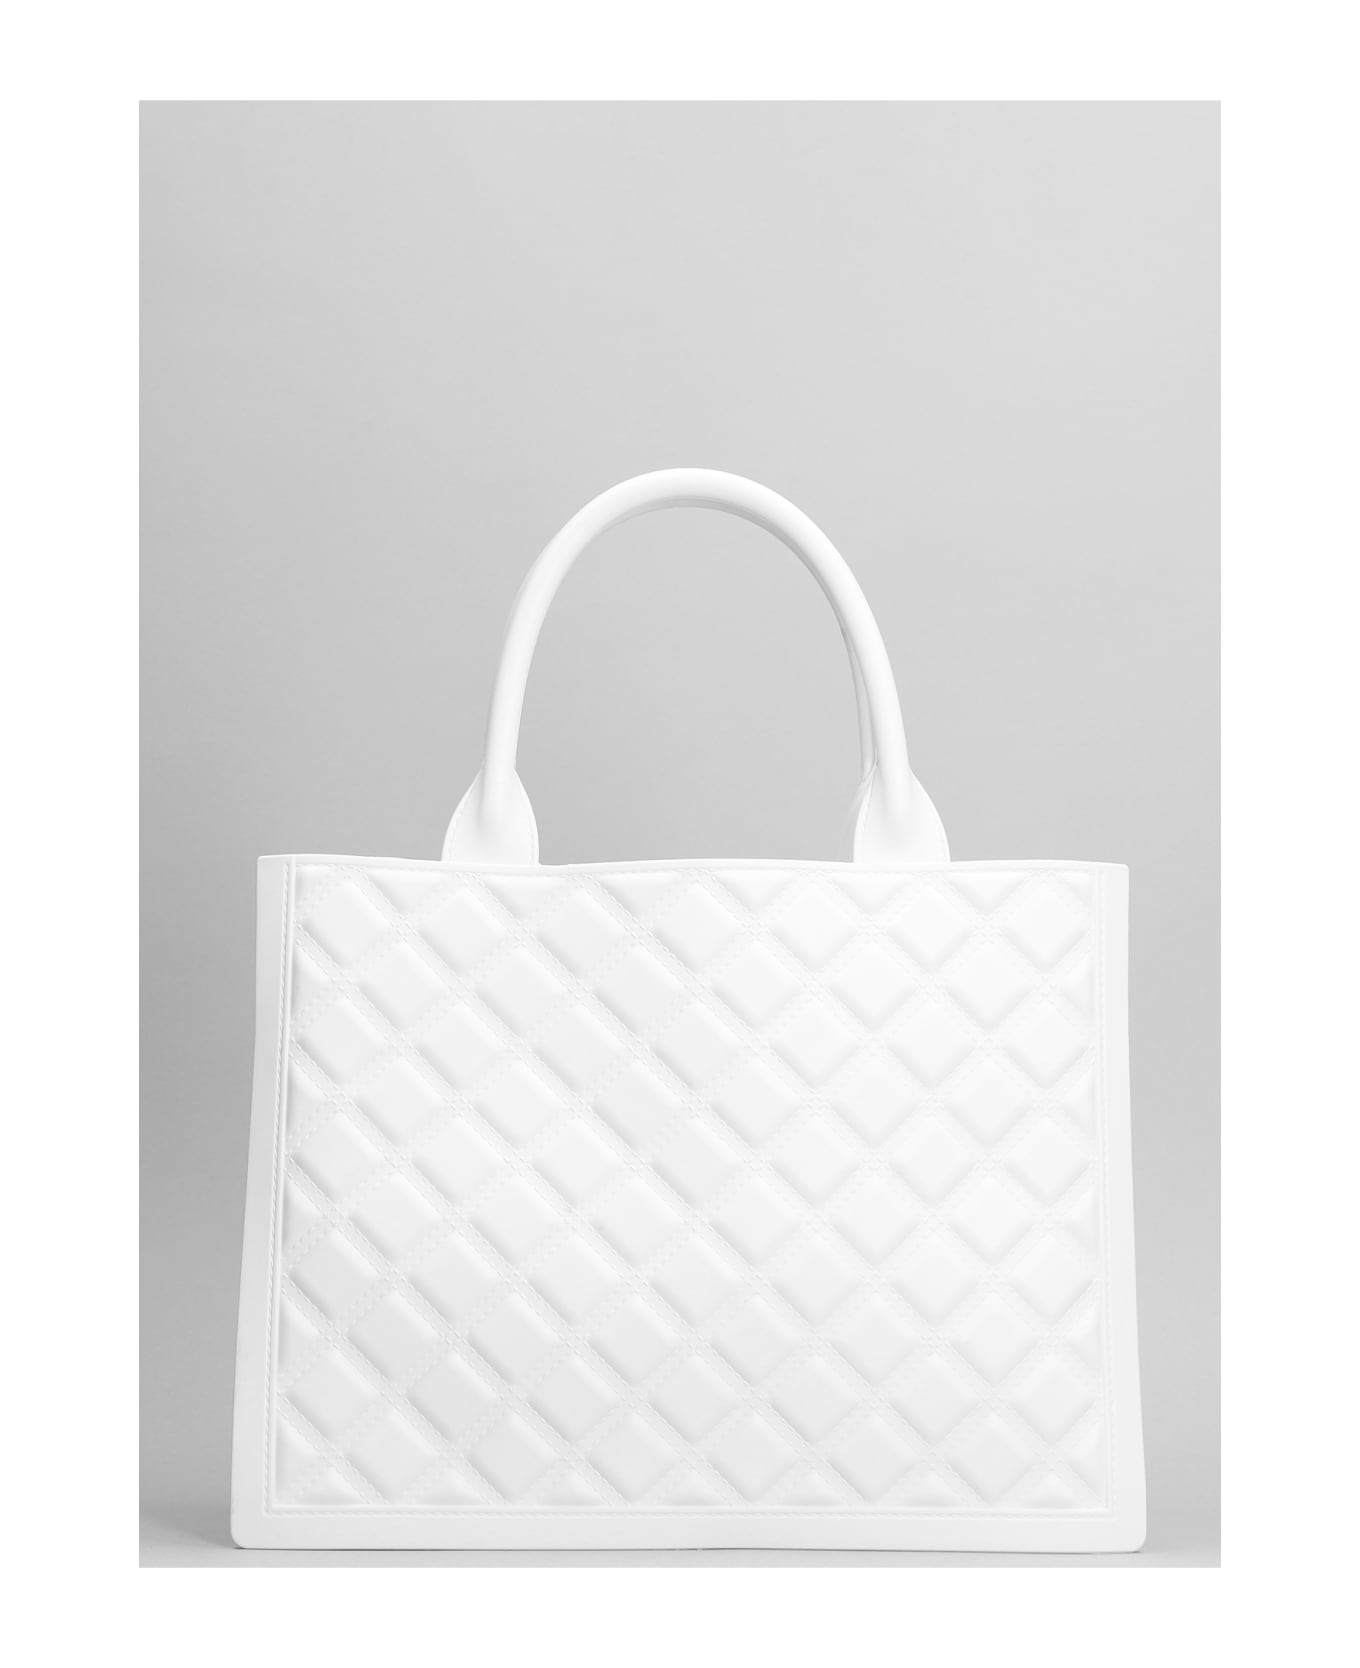 Marc Ellis Flat Buby M Shoulder Bag In White Pvc - white